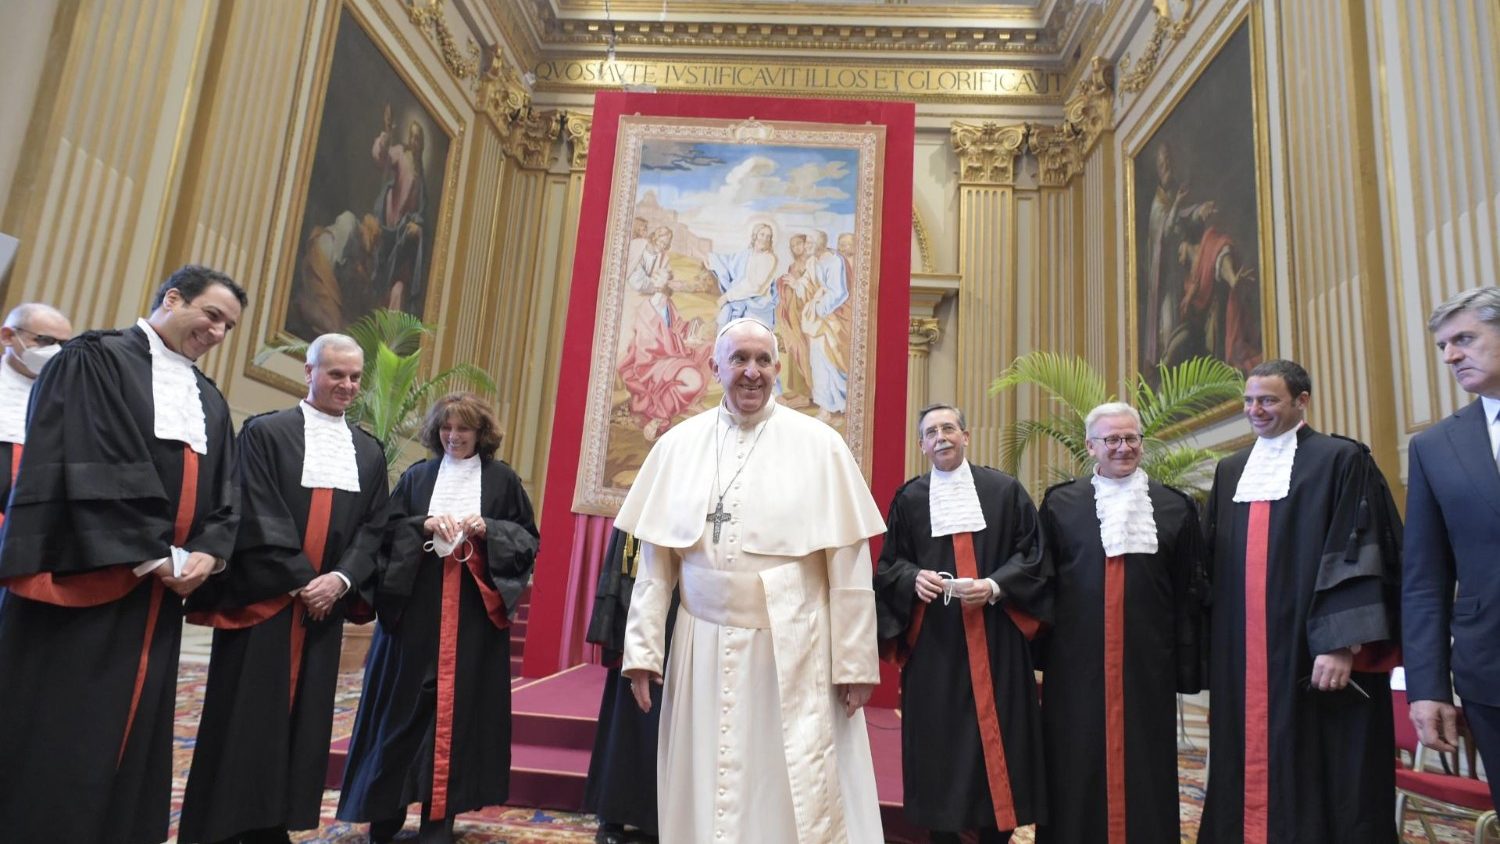 Pope Francis: Seek true justice in heaven